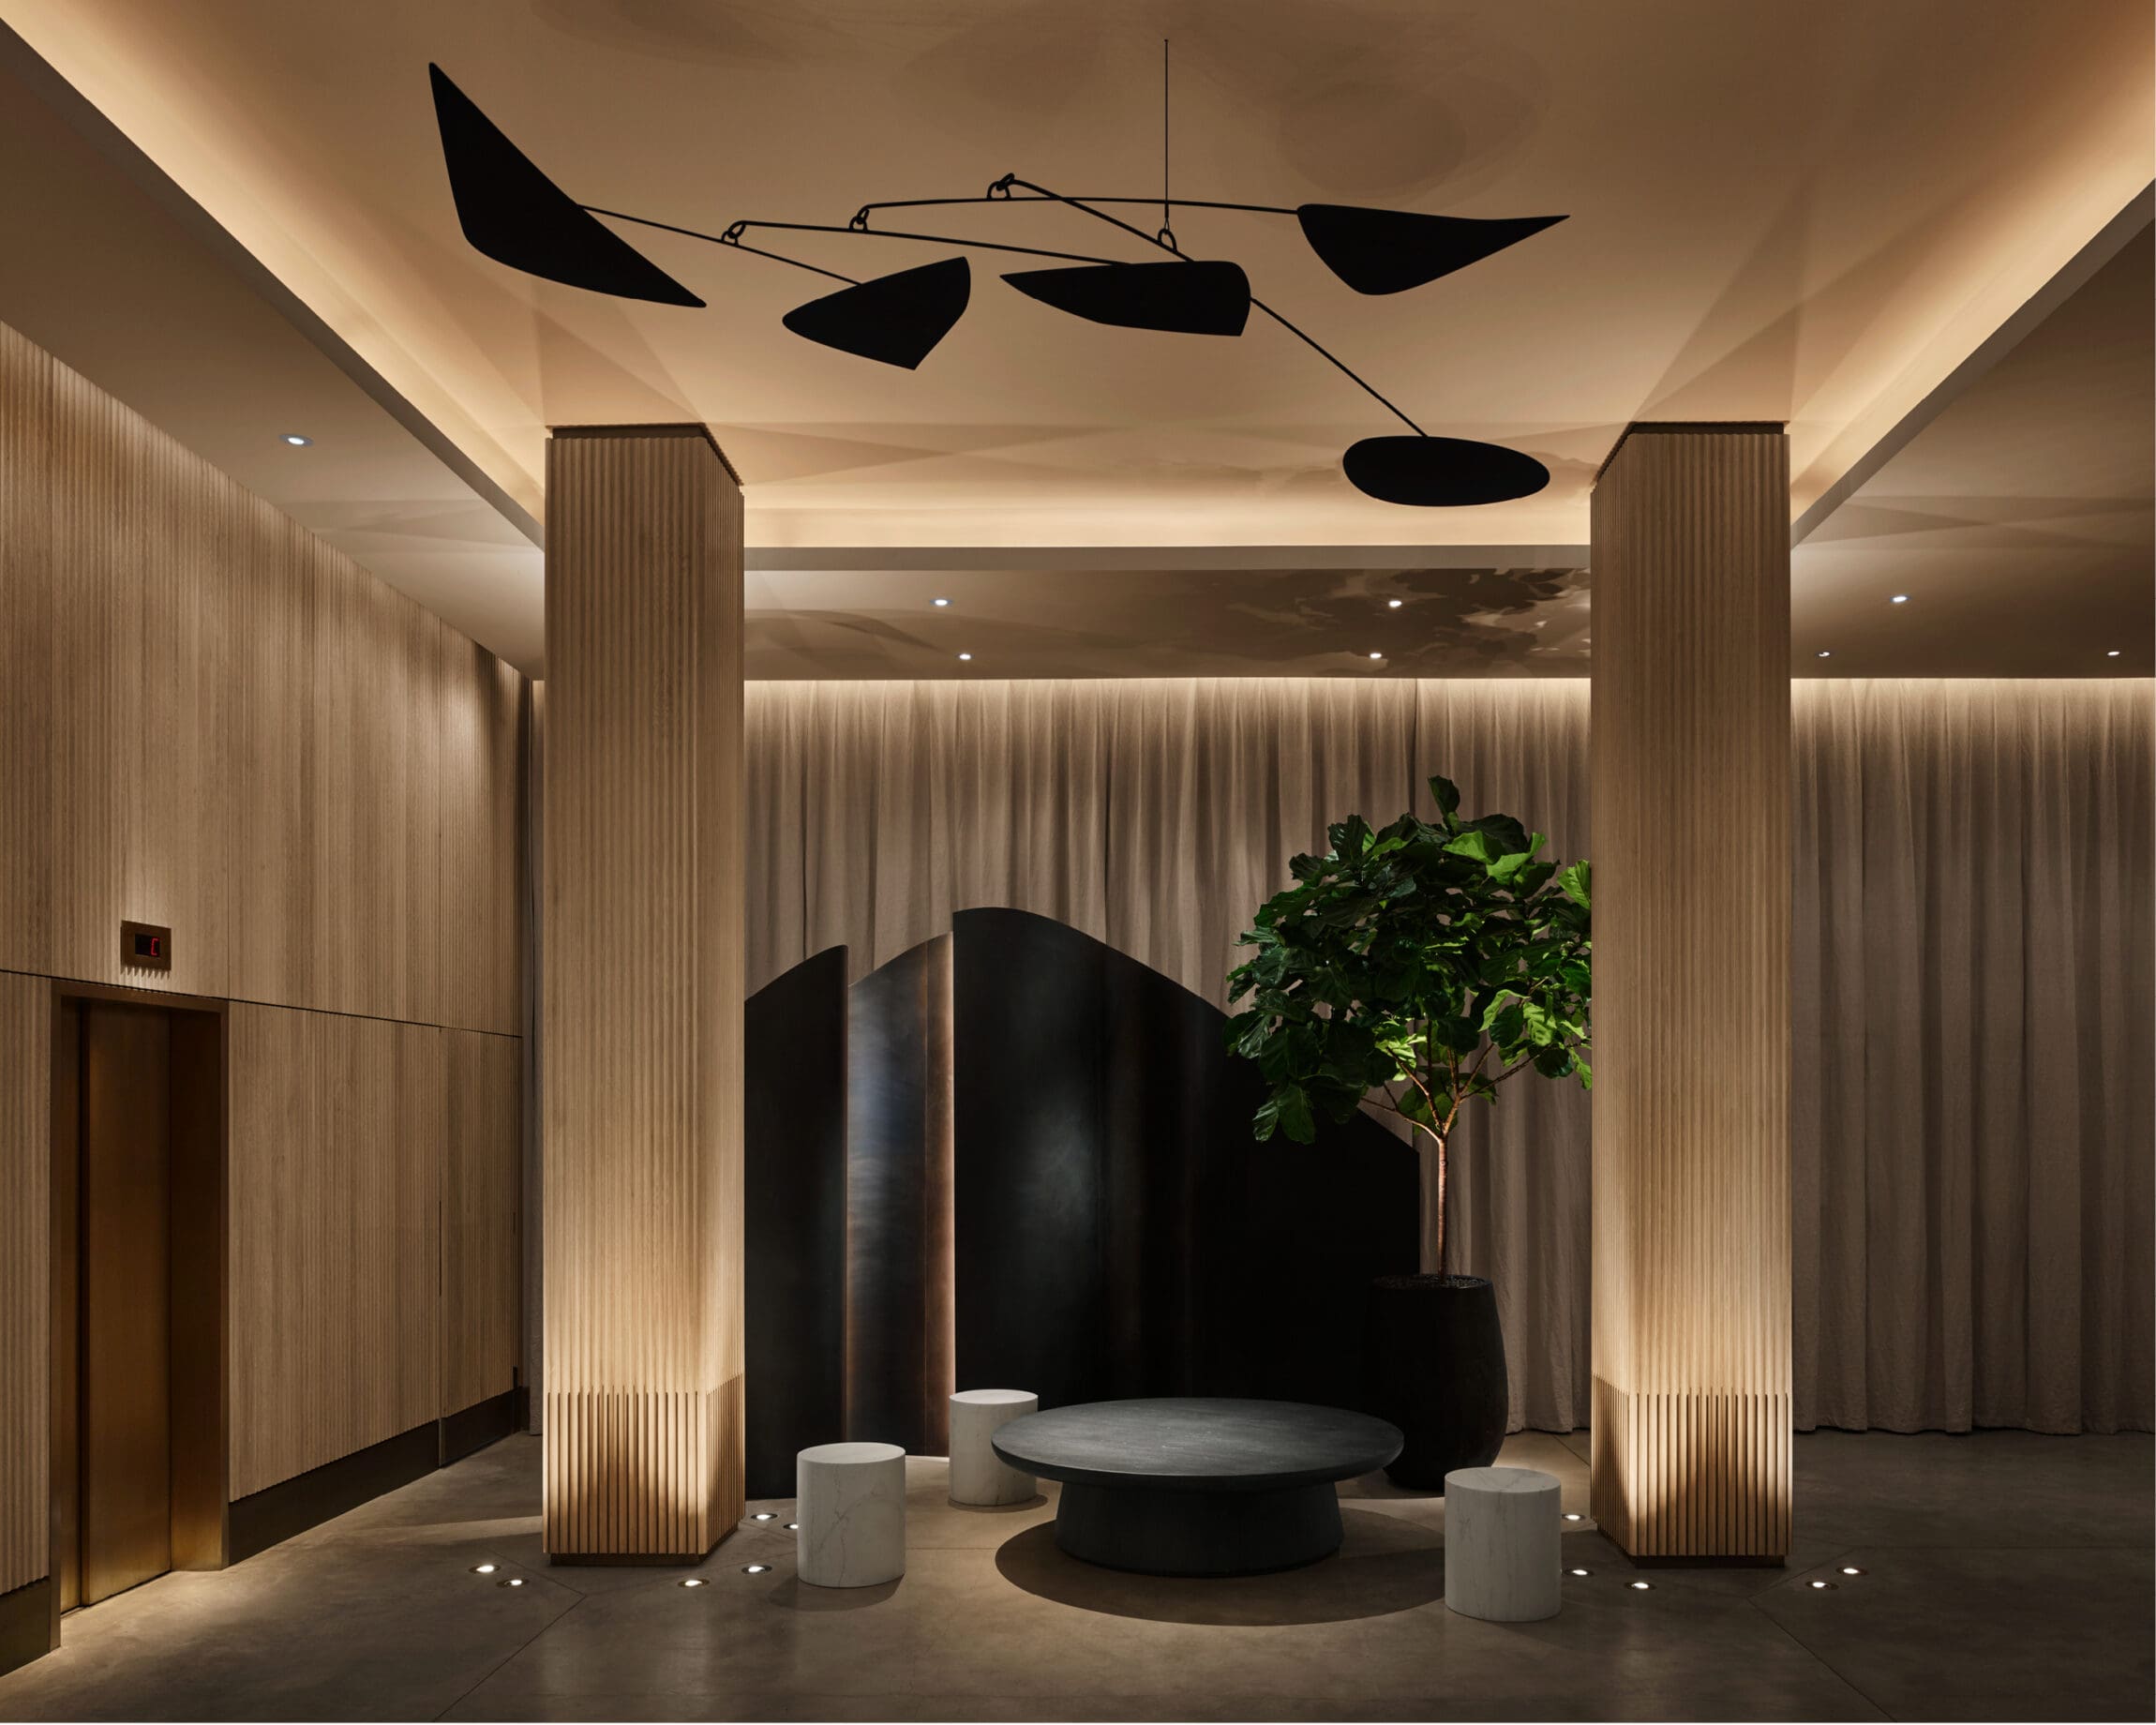 The best hotels in New York | Modern lobby deign at 11 Howard in SoHo